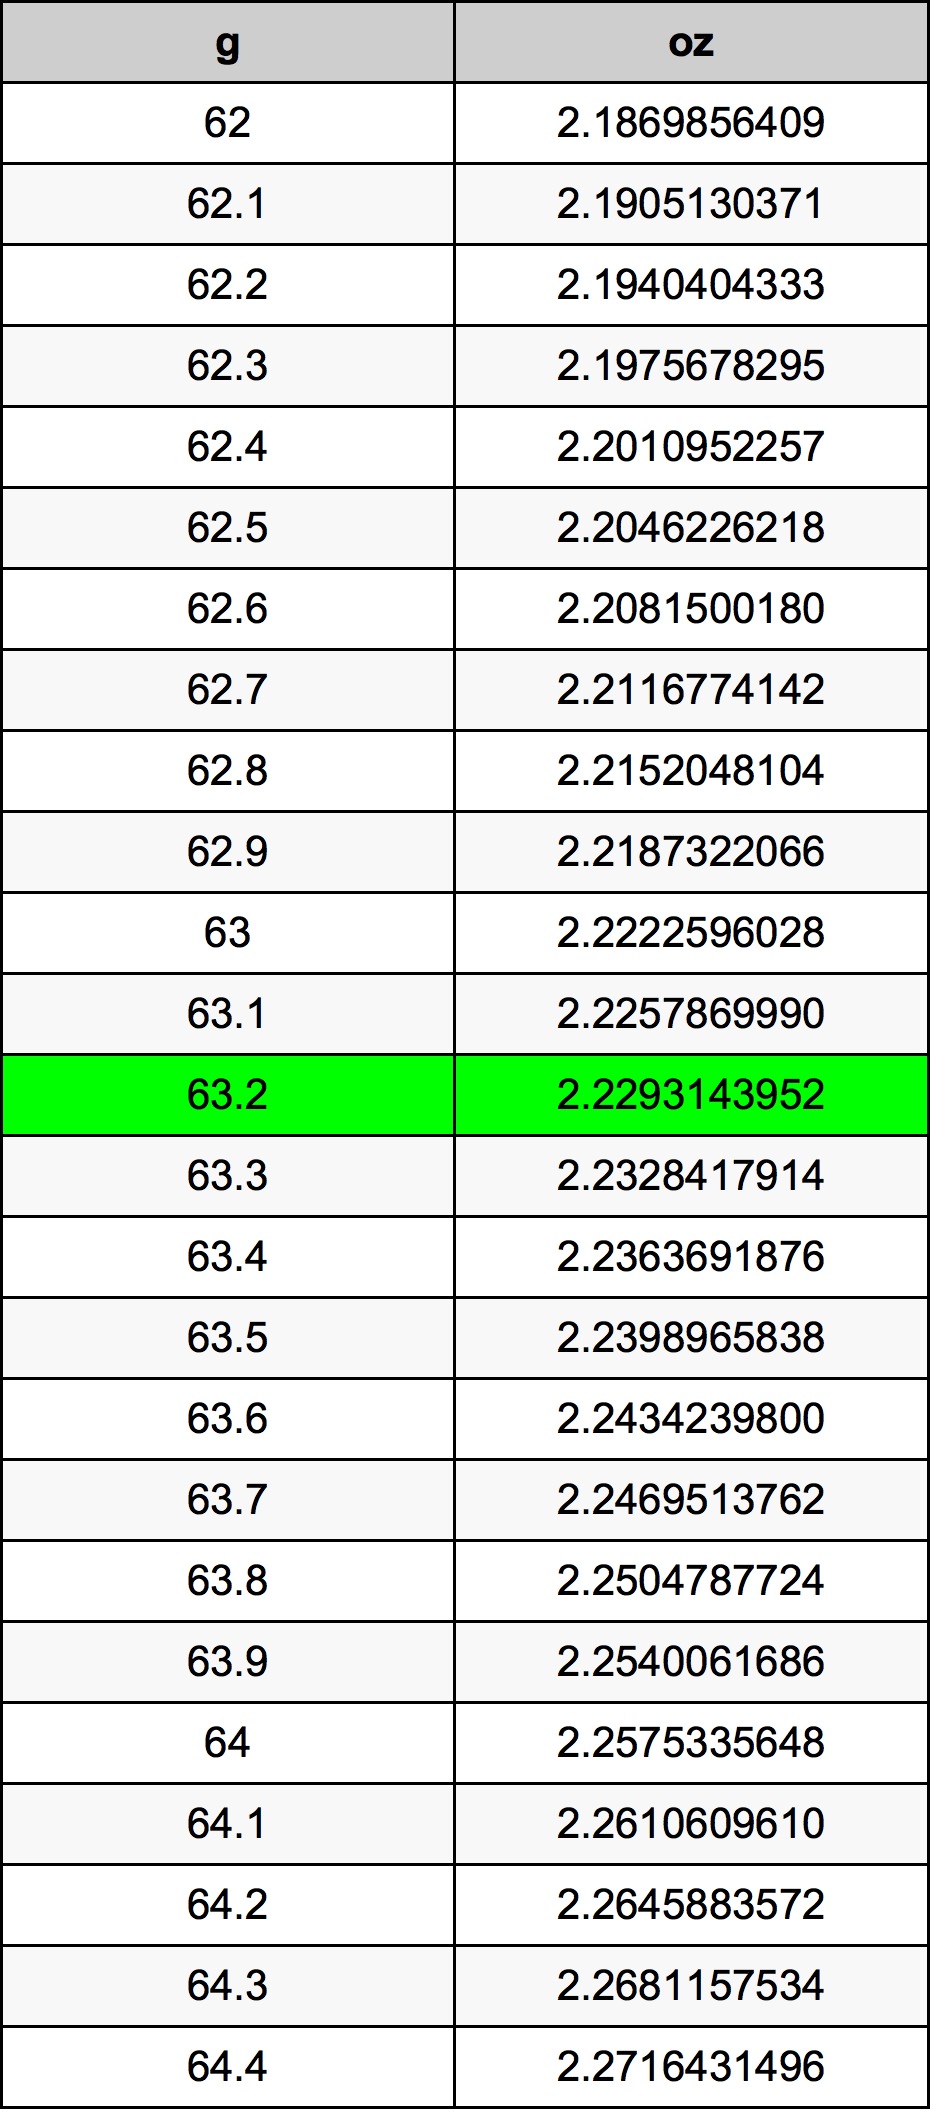 63.2 غرام جدول تحويل